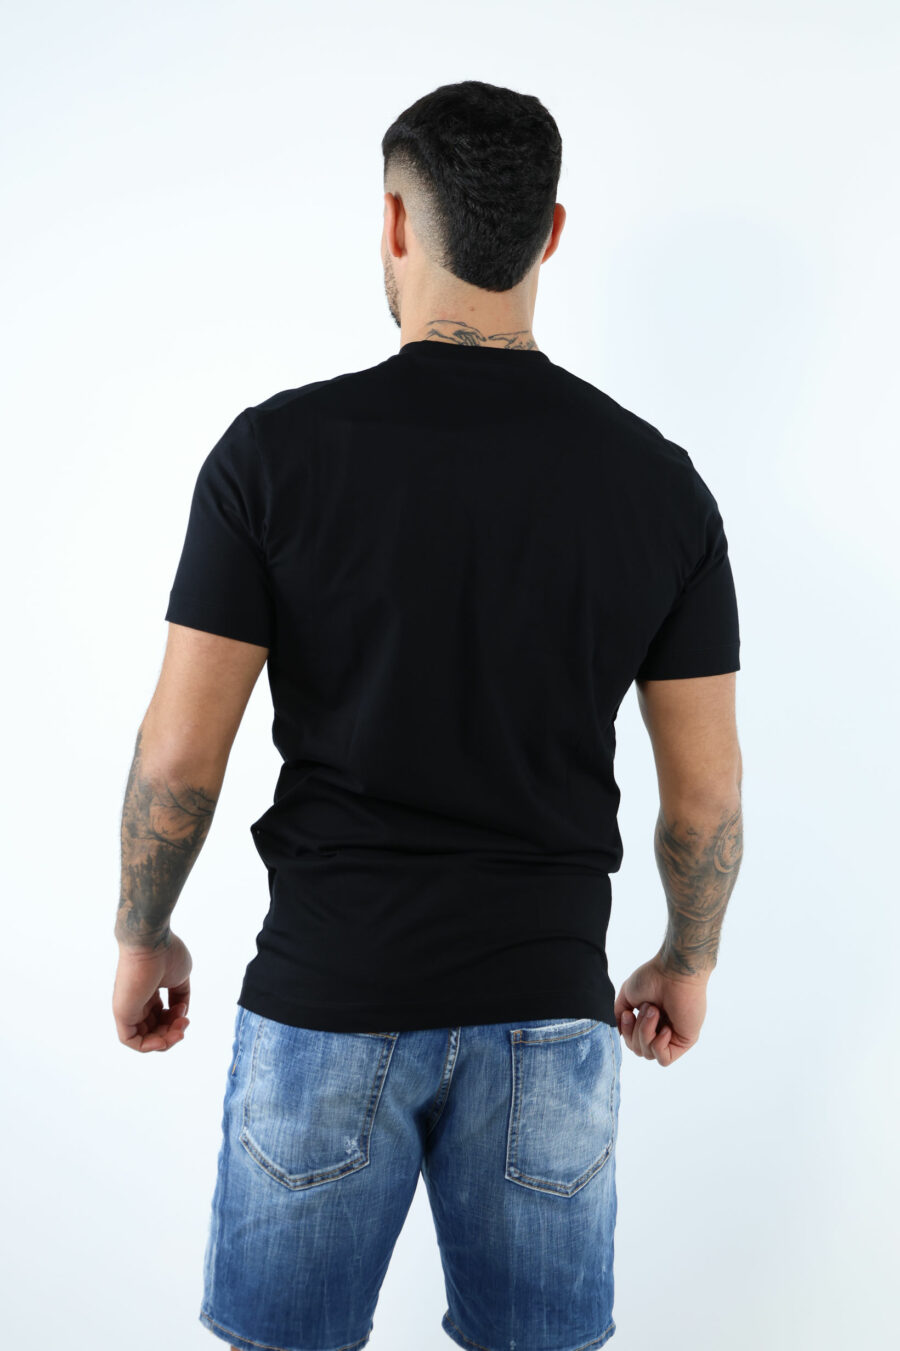 T-shirt preta com minilogo "ceresio 9, milano" - 106879